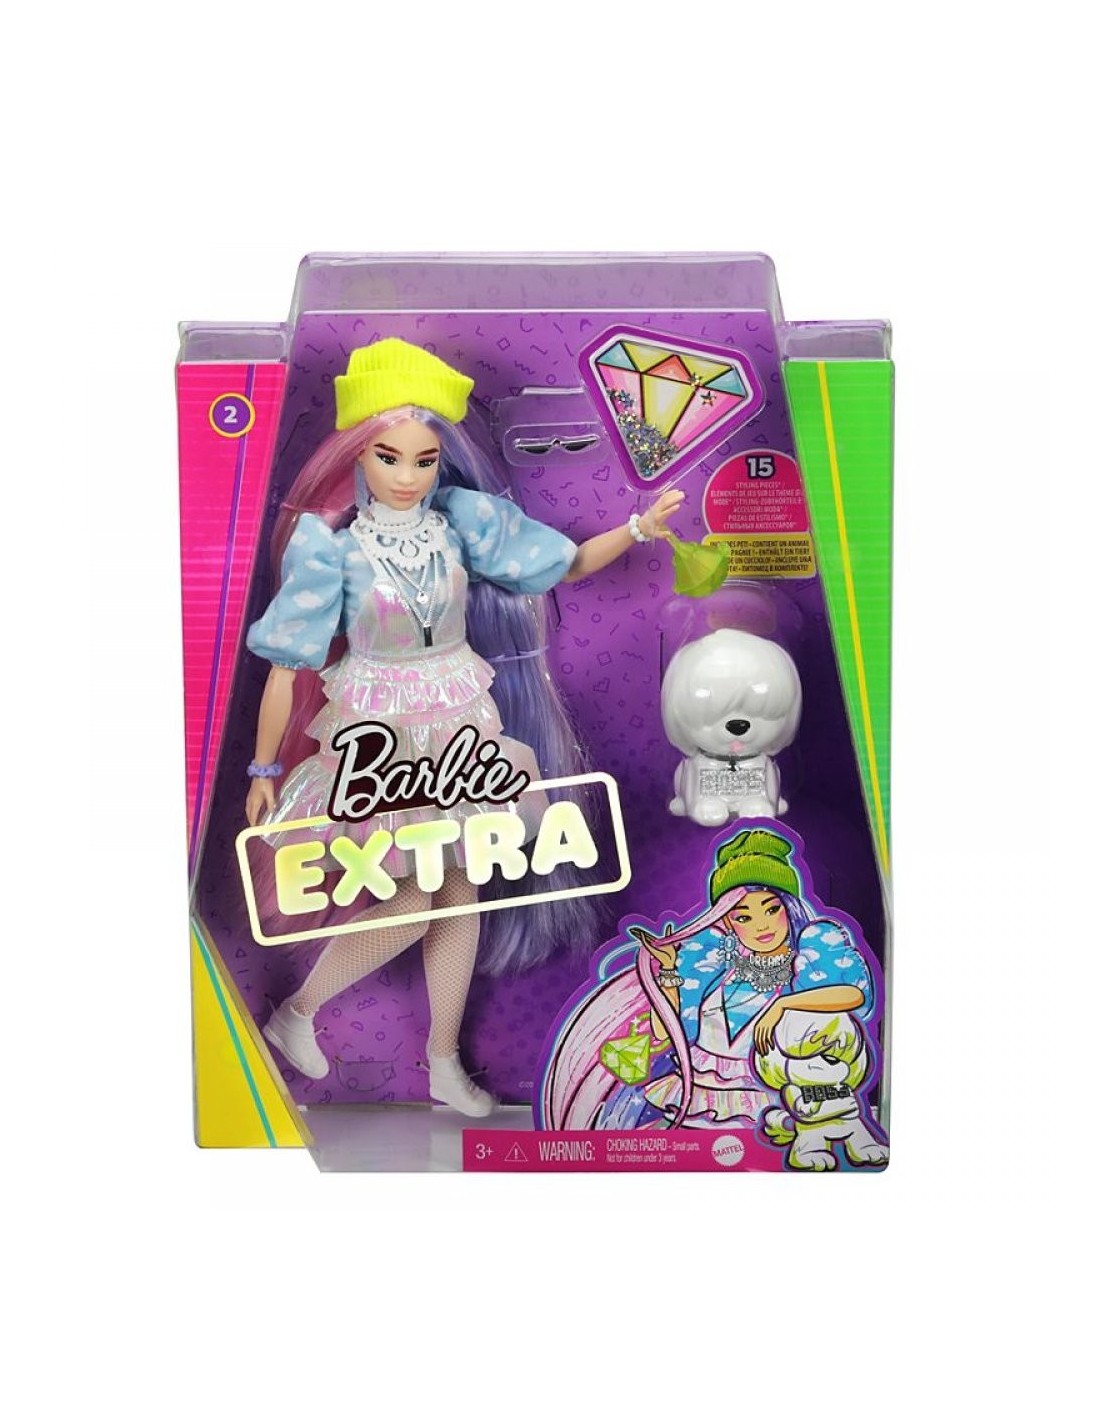 Barbie extra-beanie gvr05